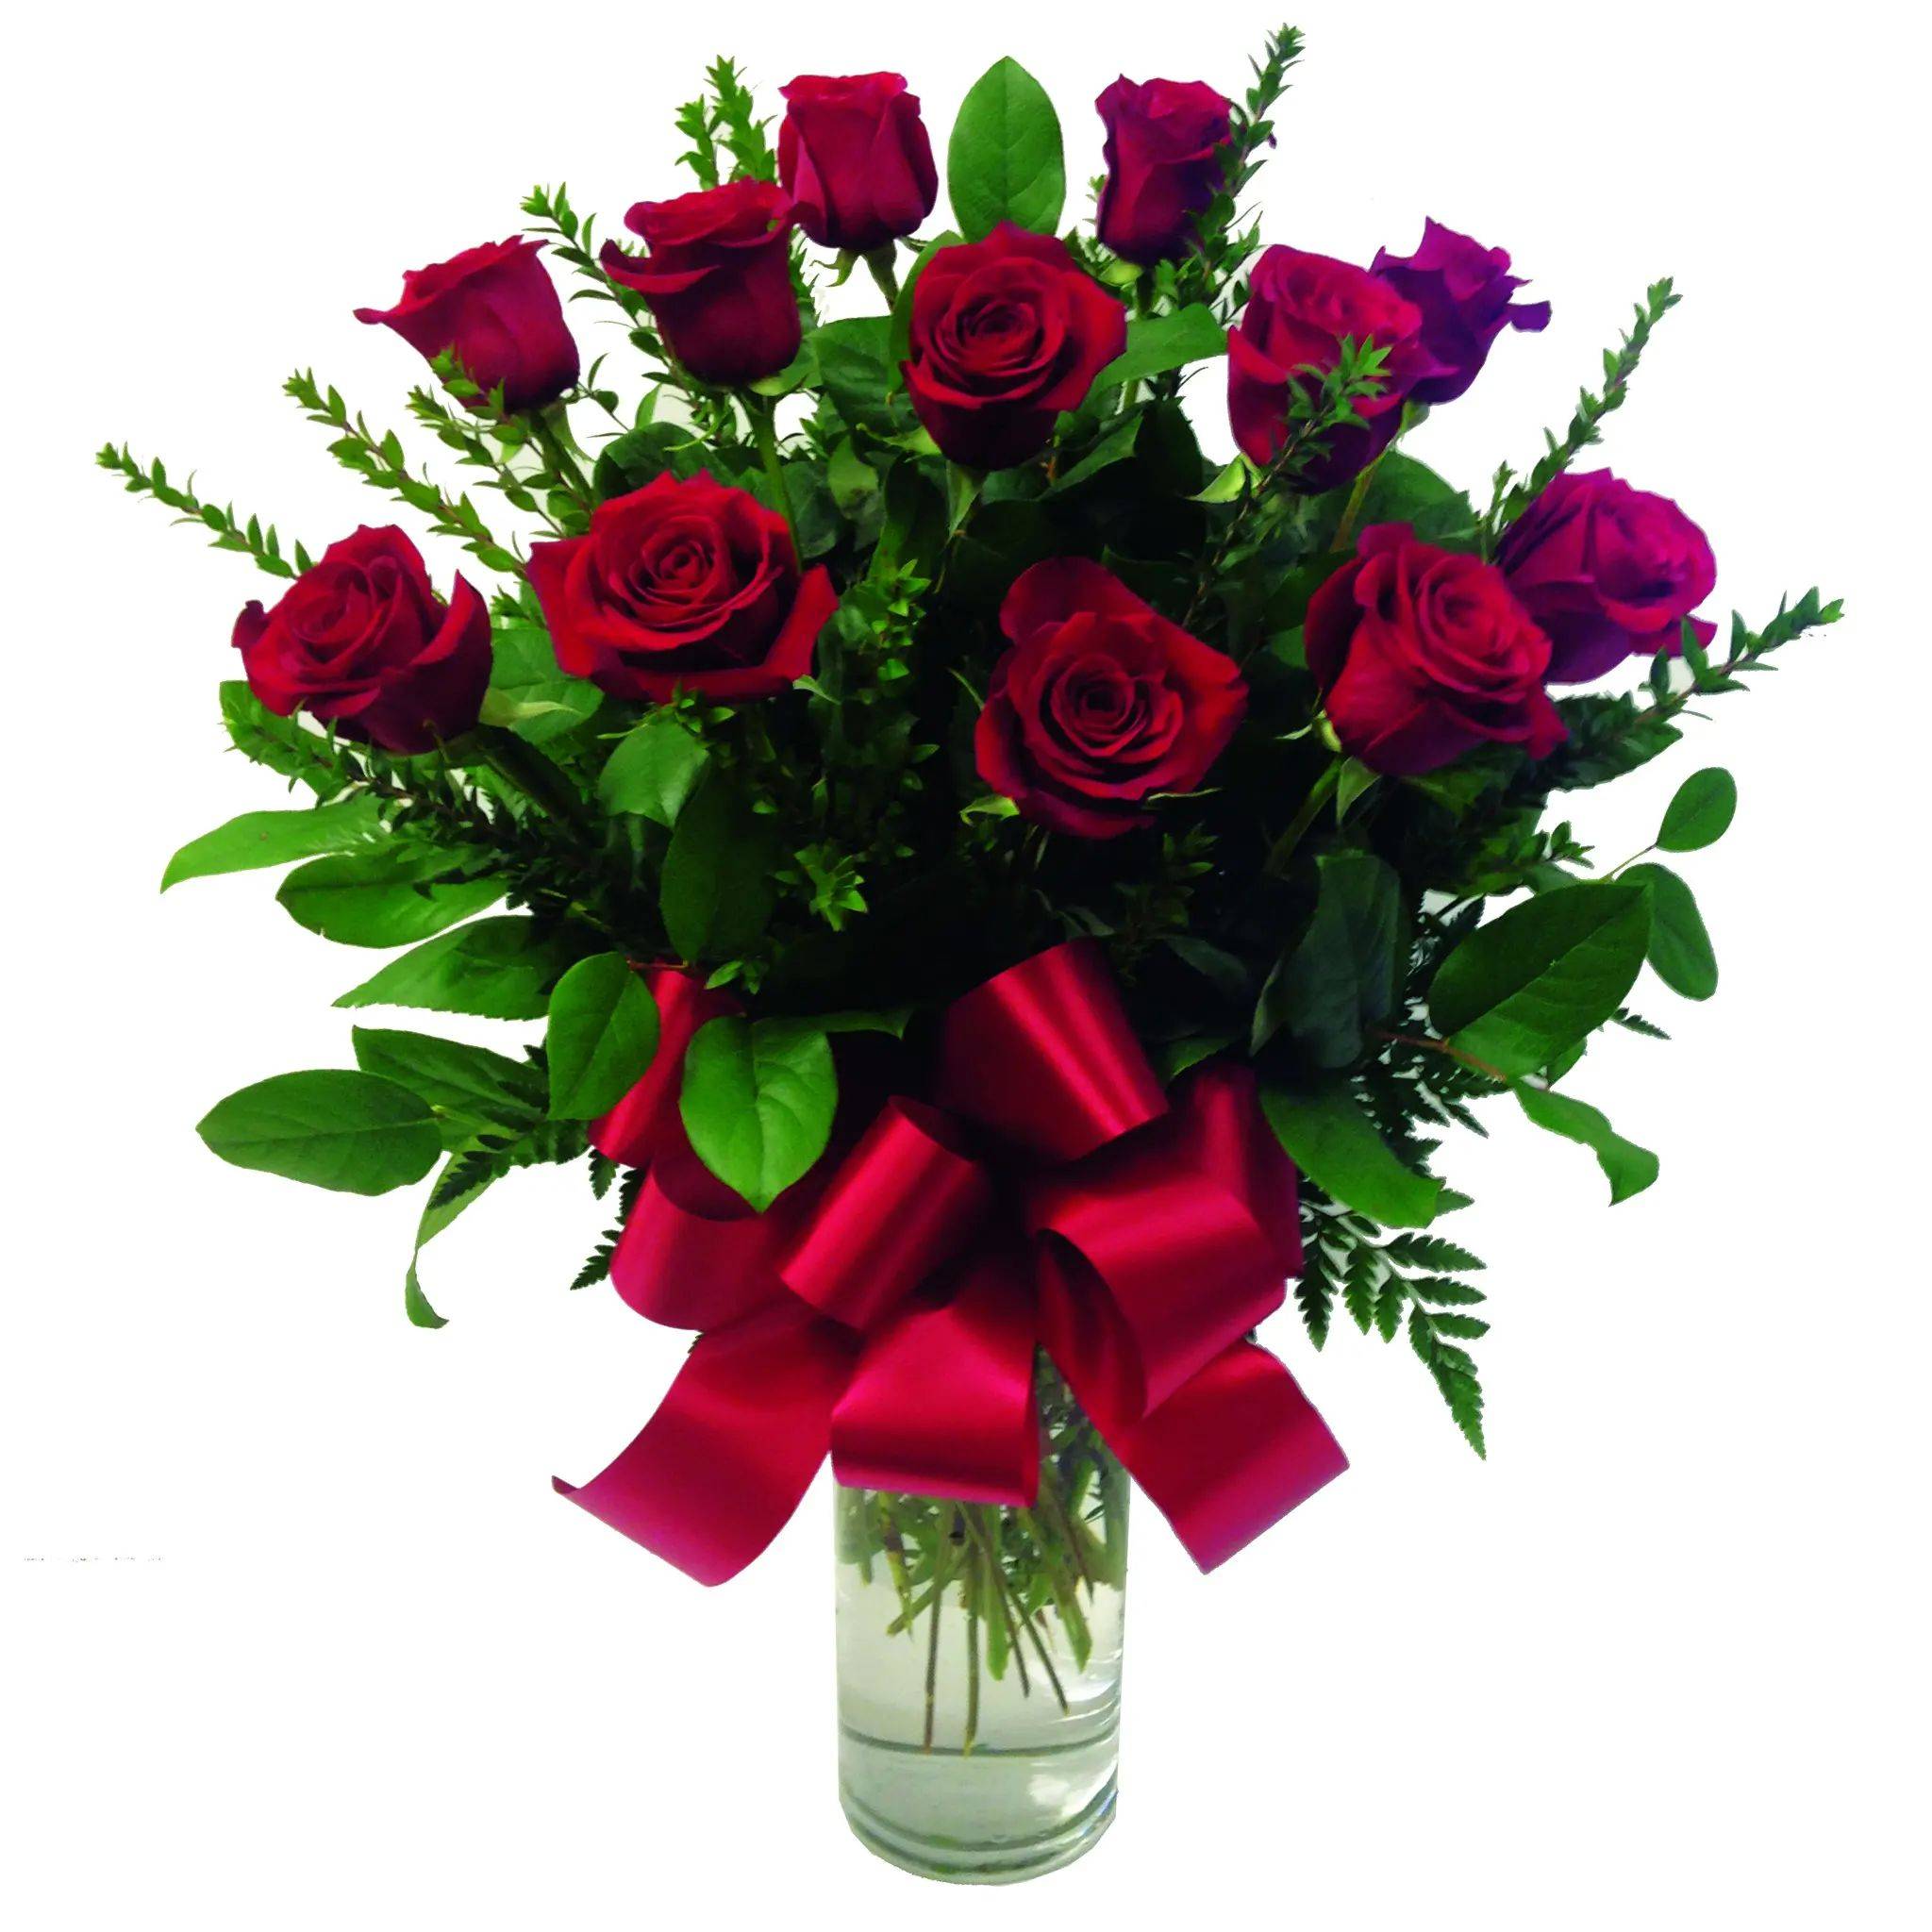 One Dozen Long Stem Roses In A Vase $45.00